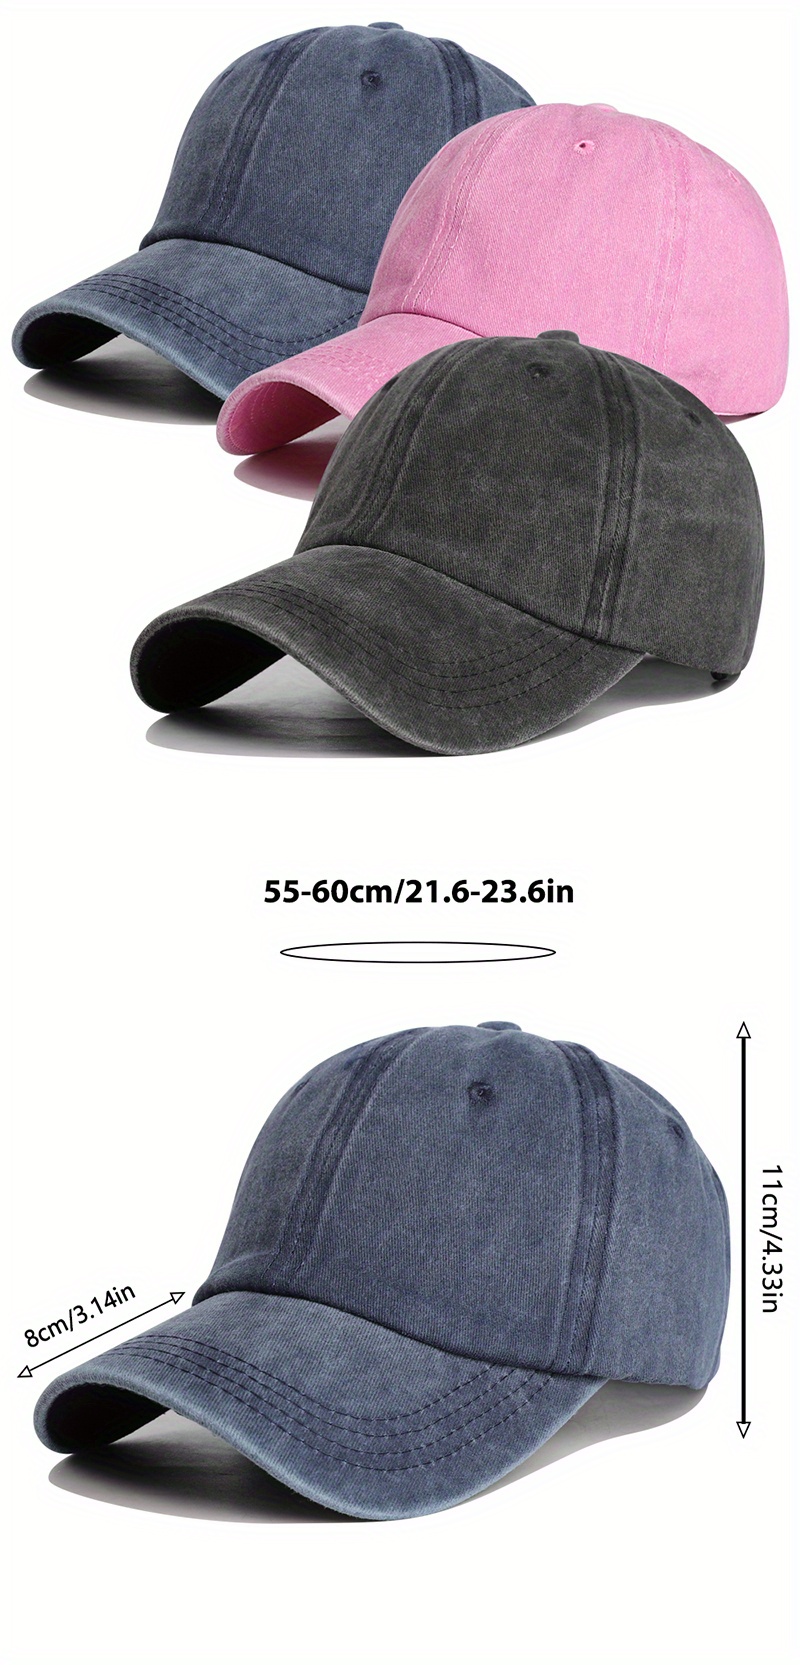 Adjustable Cotton Denim Baseball Cap For Men And Women Solid Color